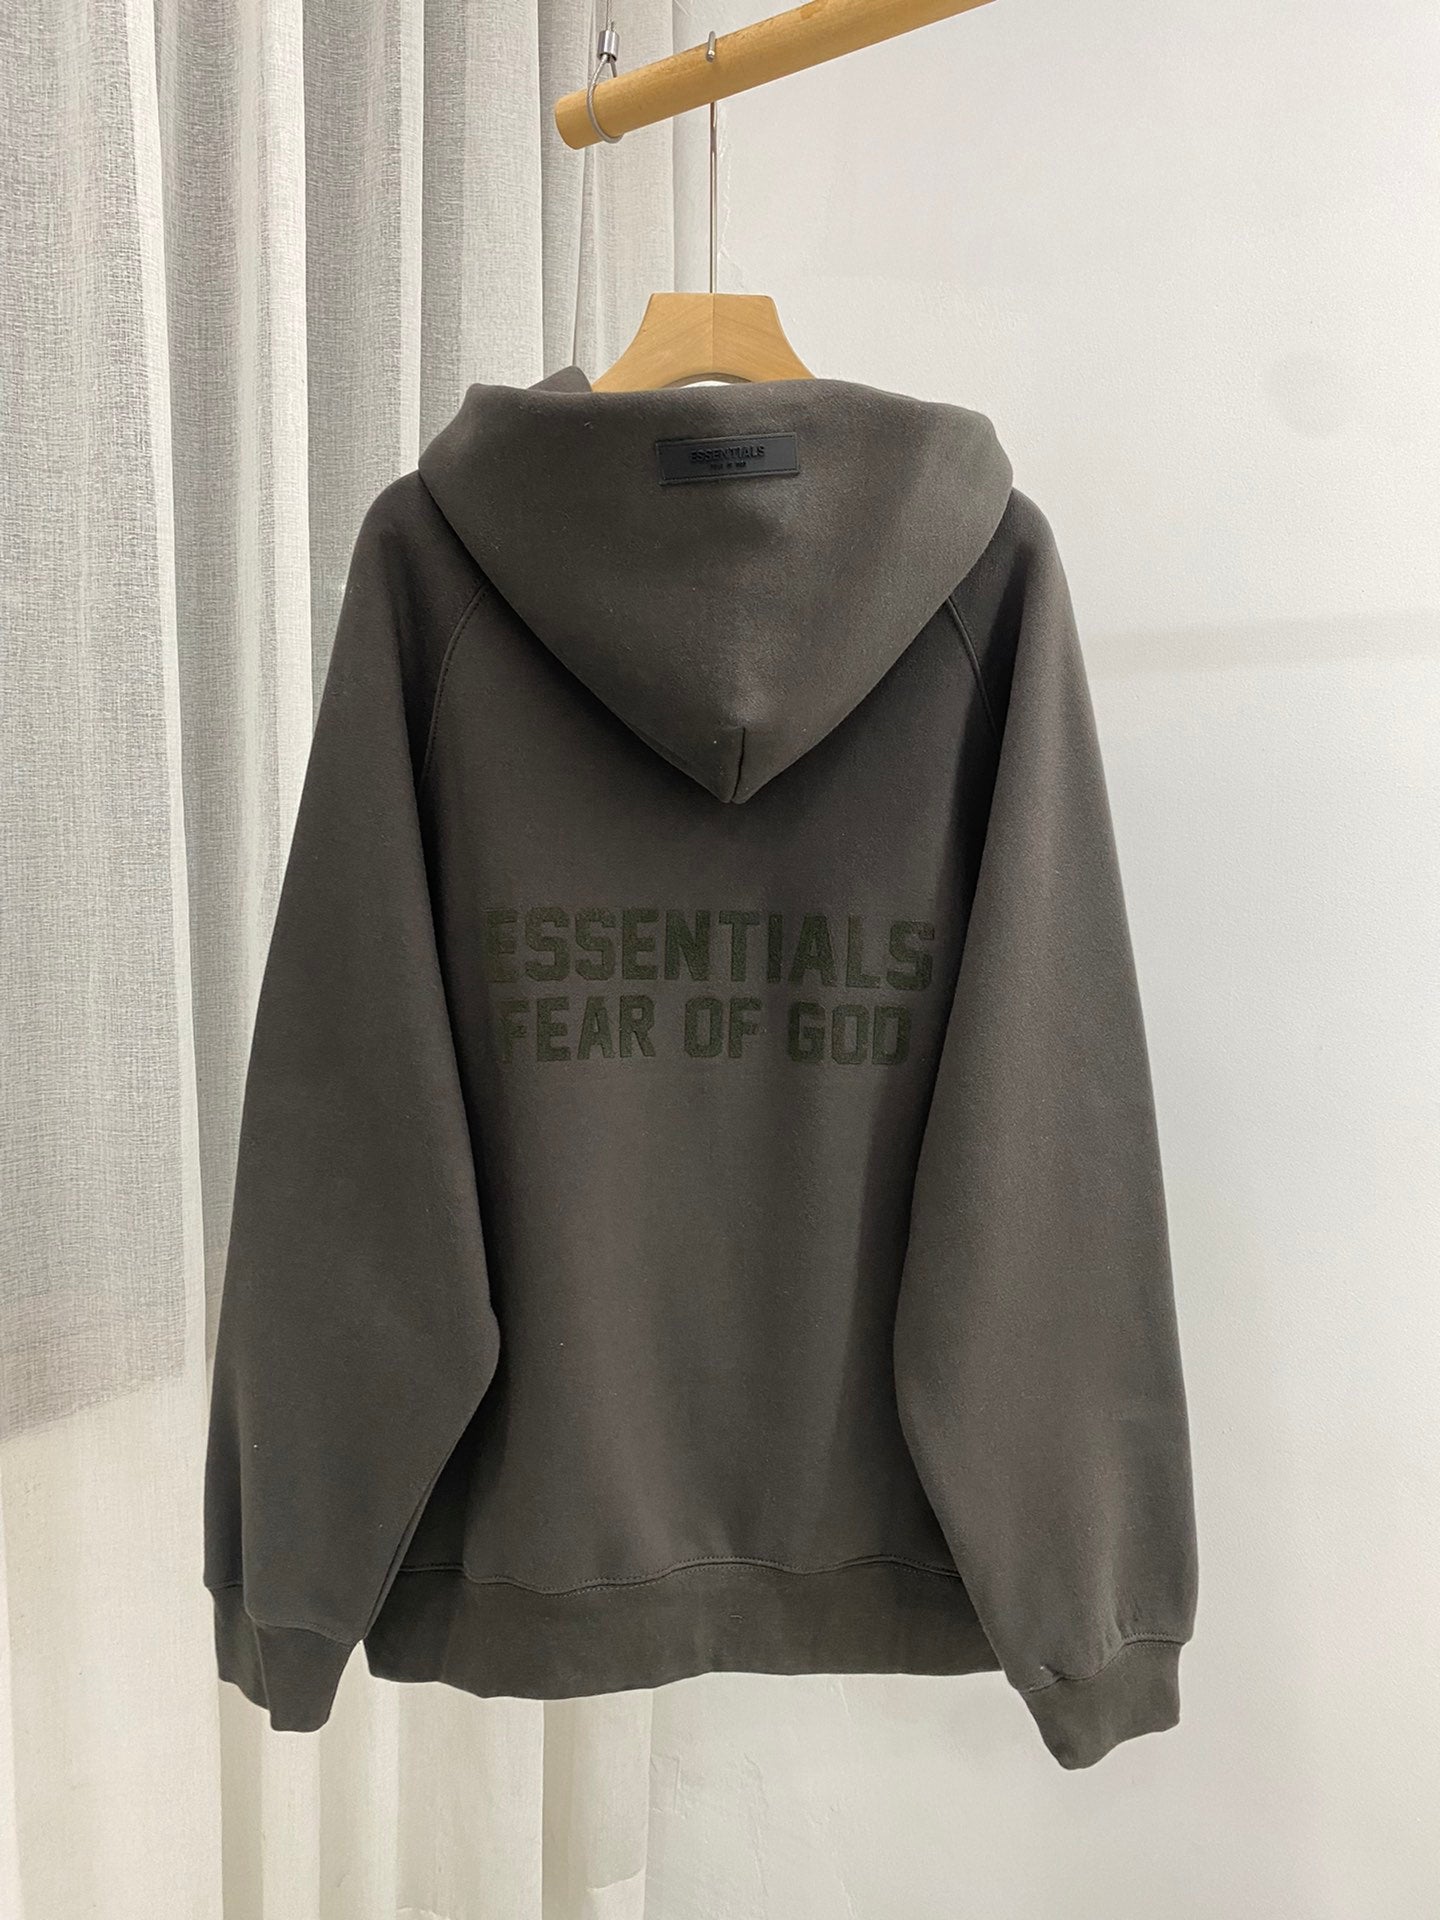 Fear of God Essentials 2022 zip up hoodie